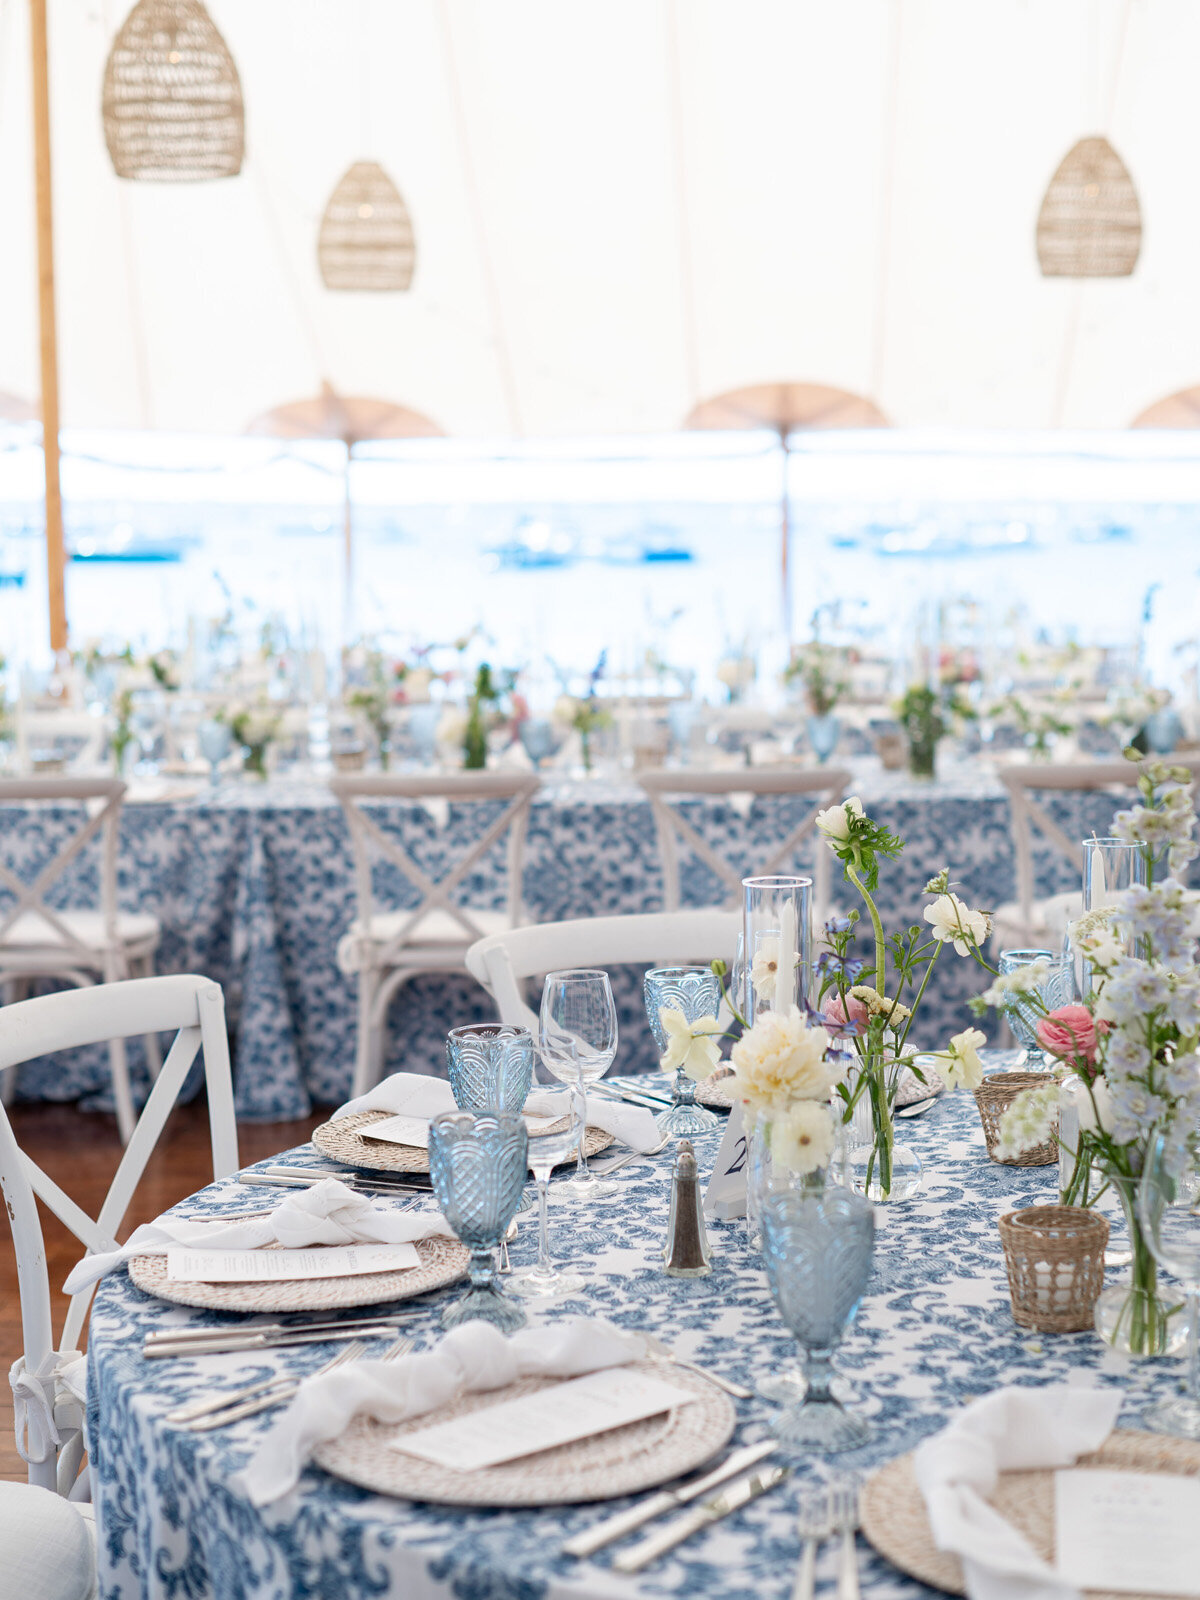 Kate-Murtaugh-Events-Newport-coastal-wedding-blue-and-white